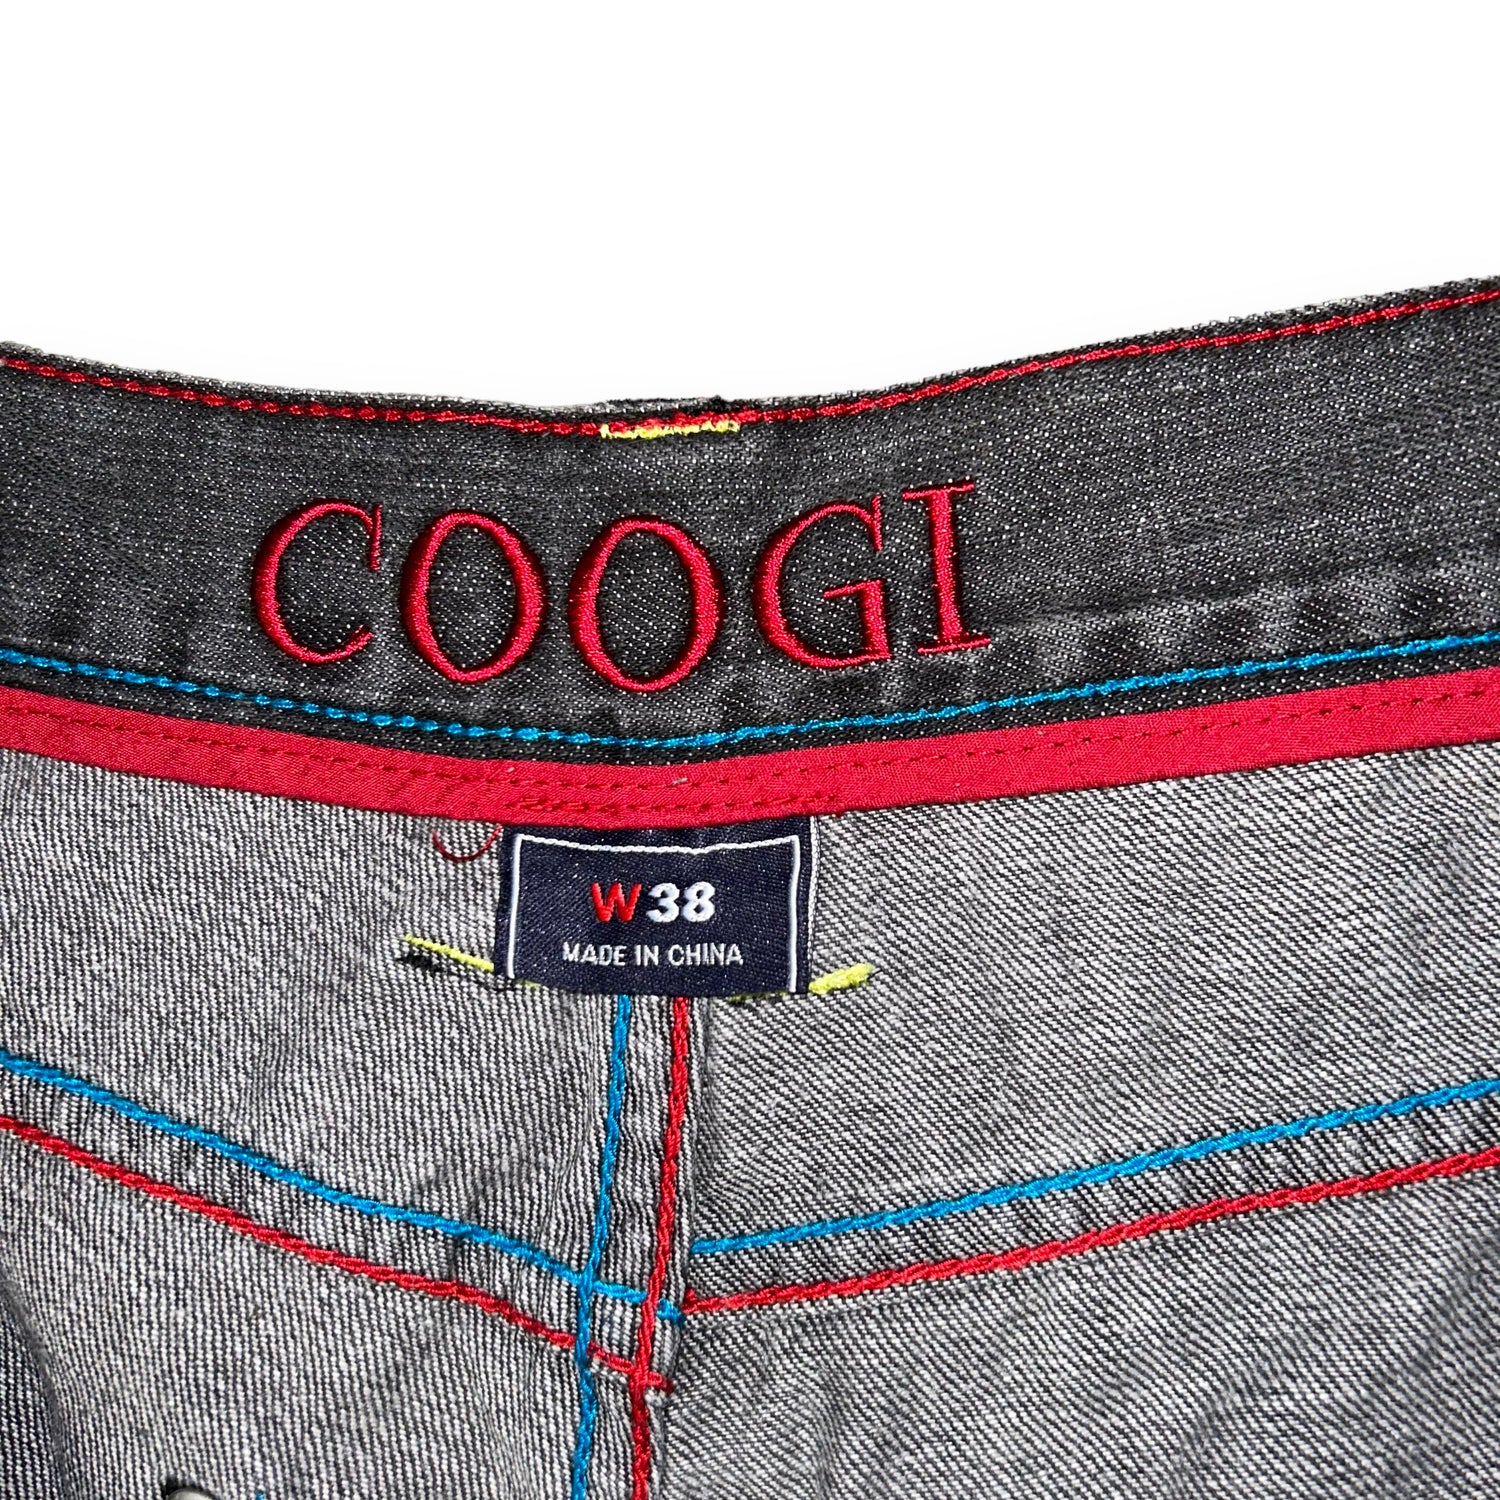 Baggy Shorts Coogi Vintage  (38 USA  XXL)